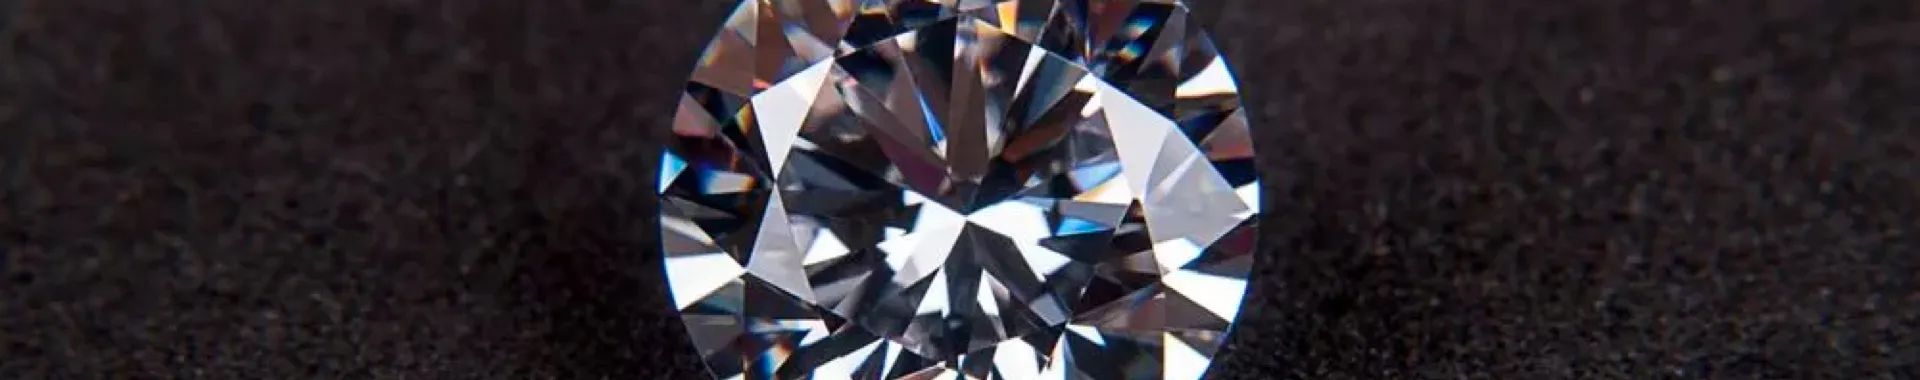 DIAMOND’S ANATOMY